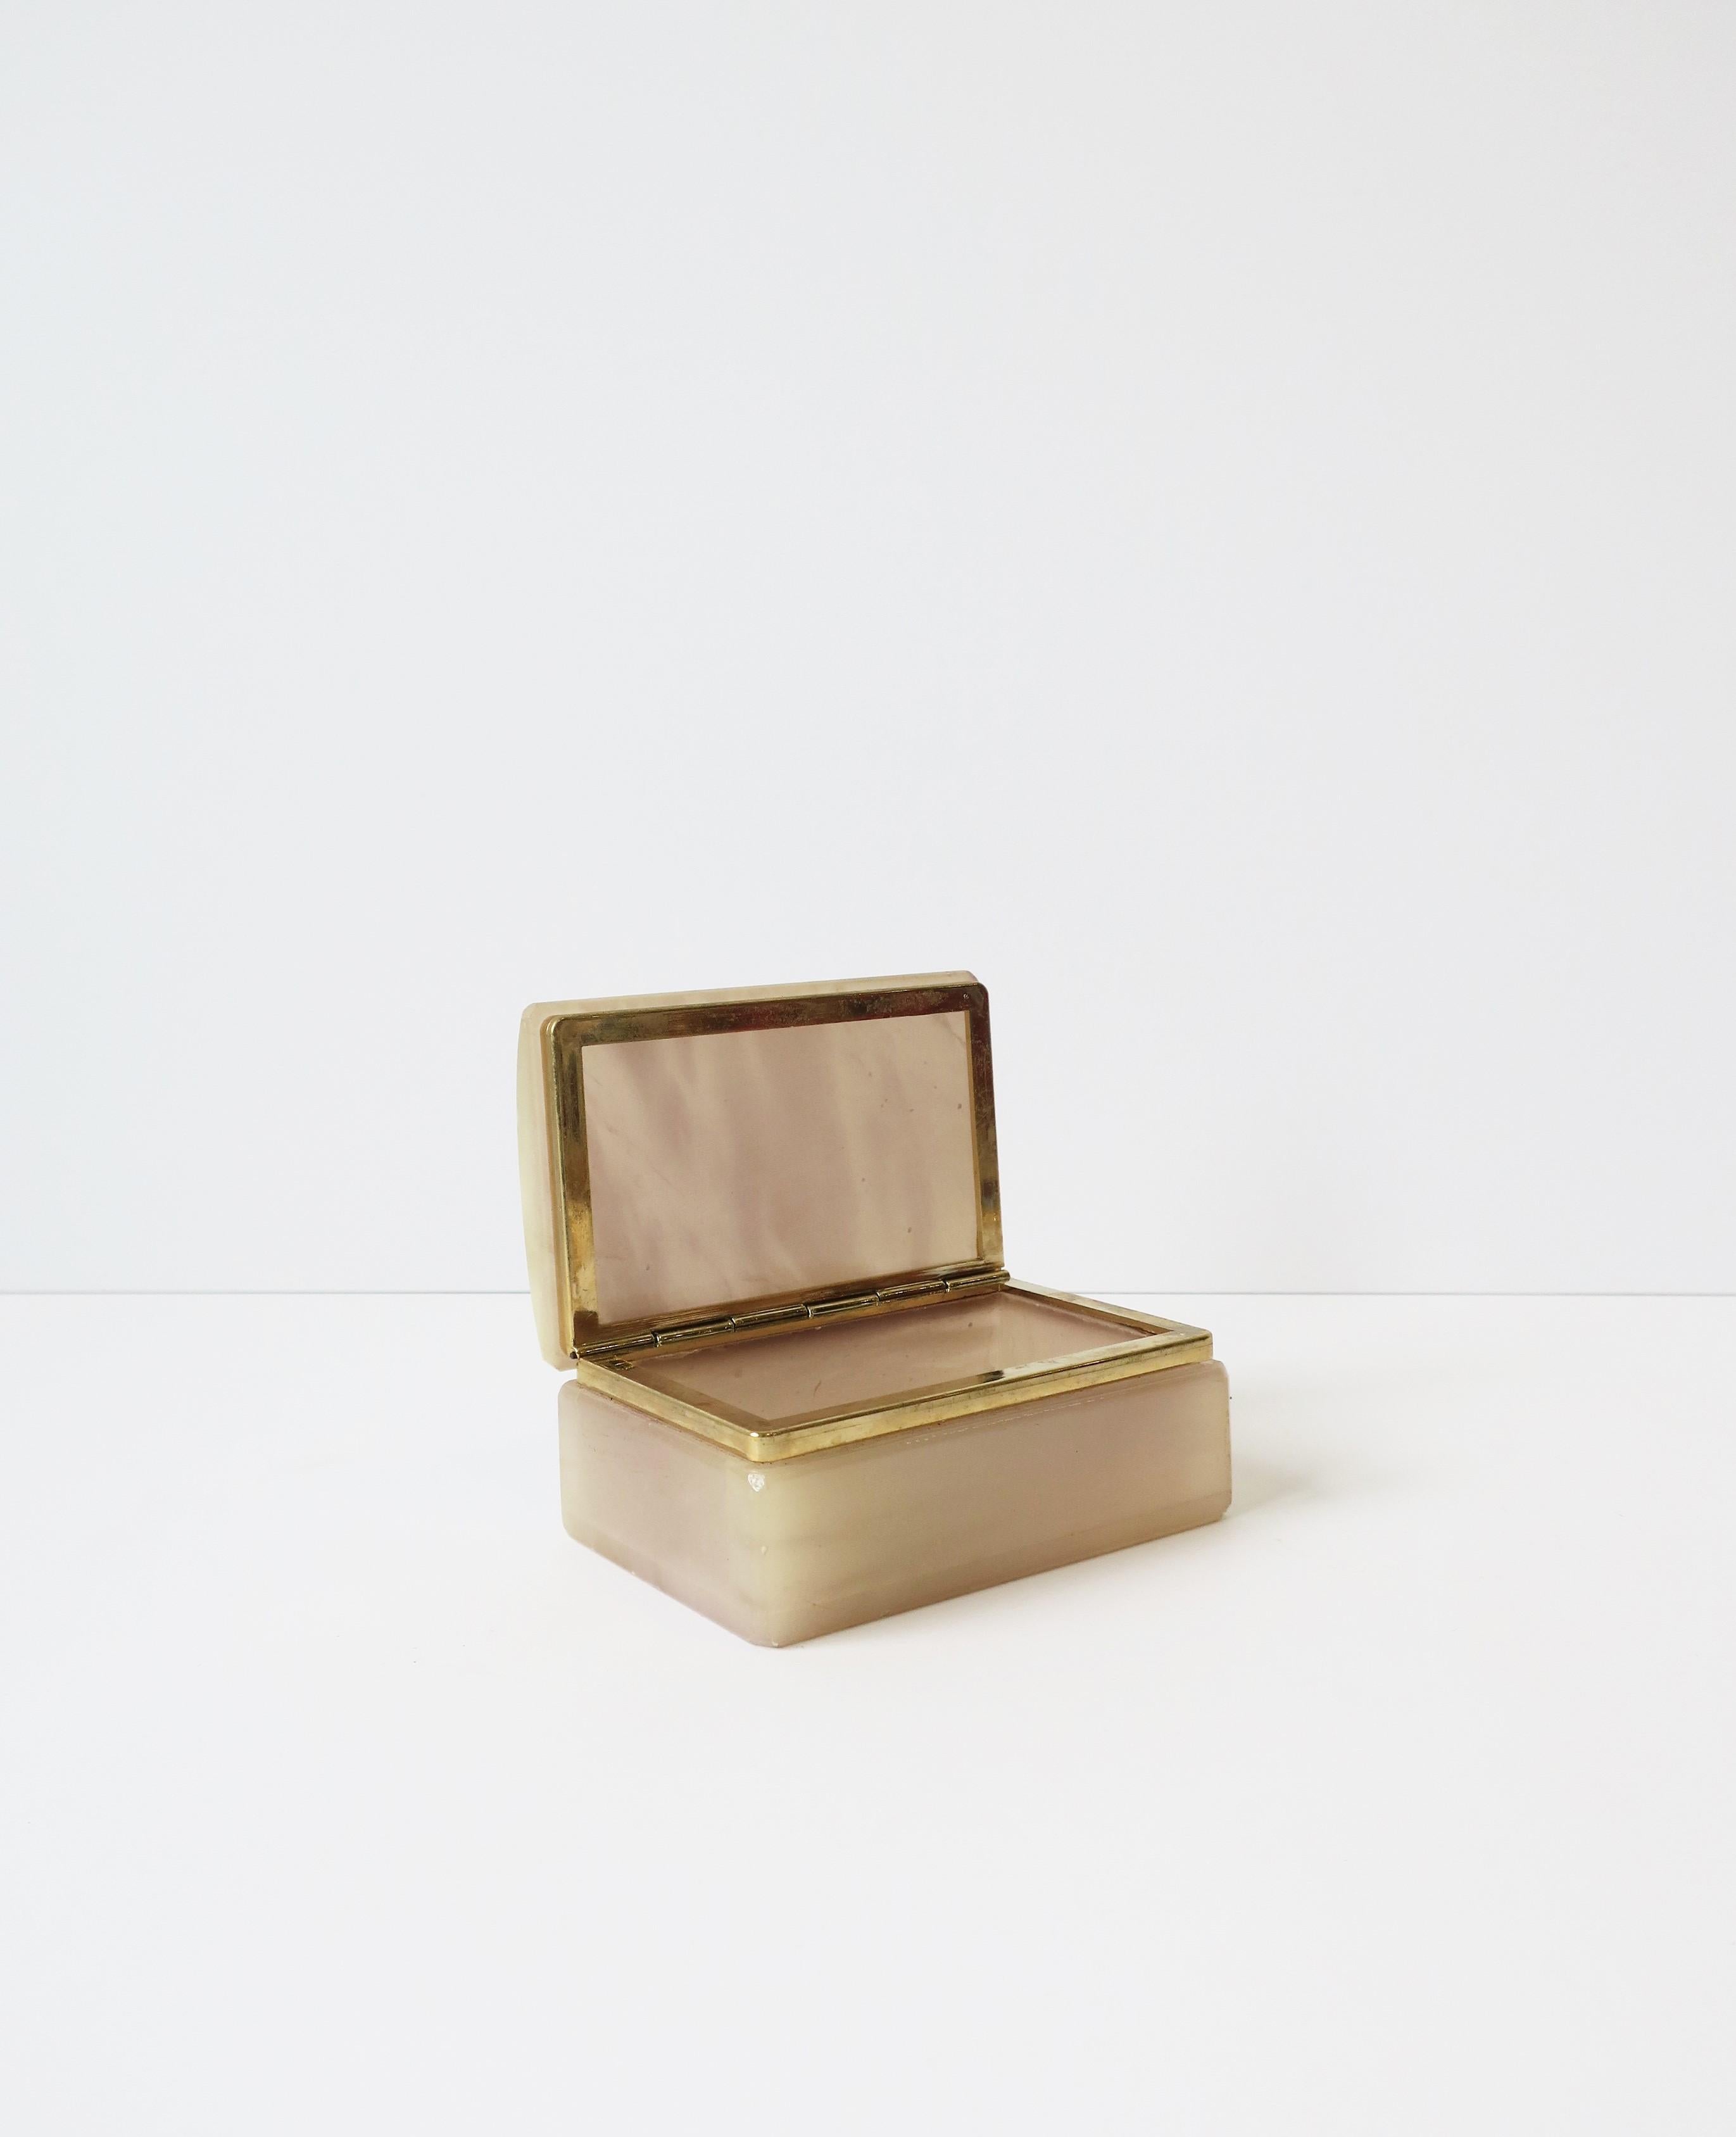 Onyx Marble Jewelry or Decorative Box 1